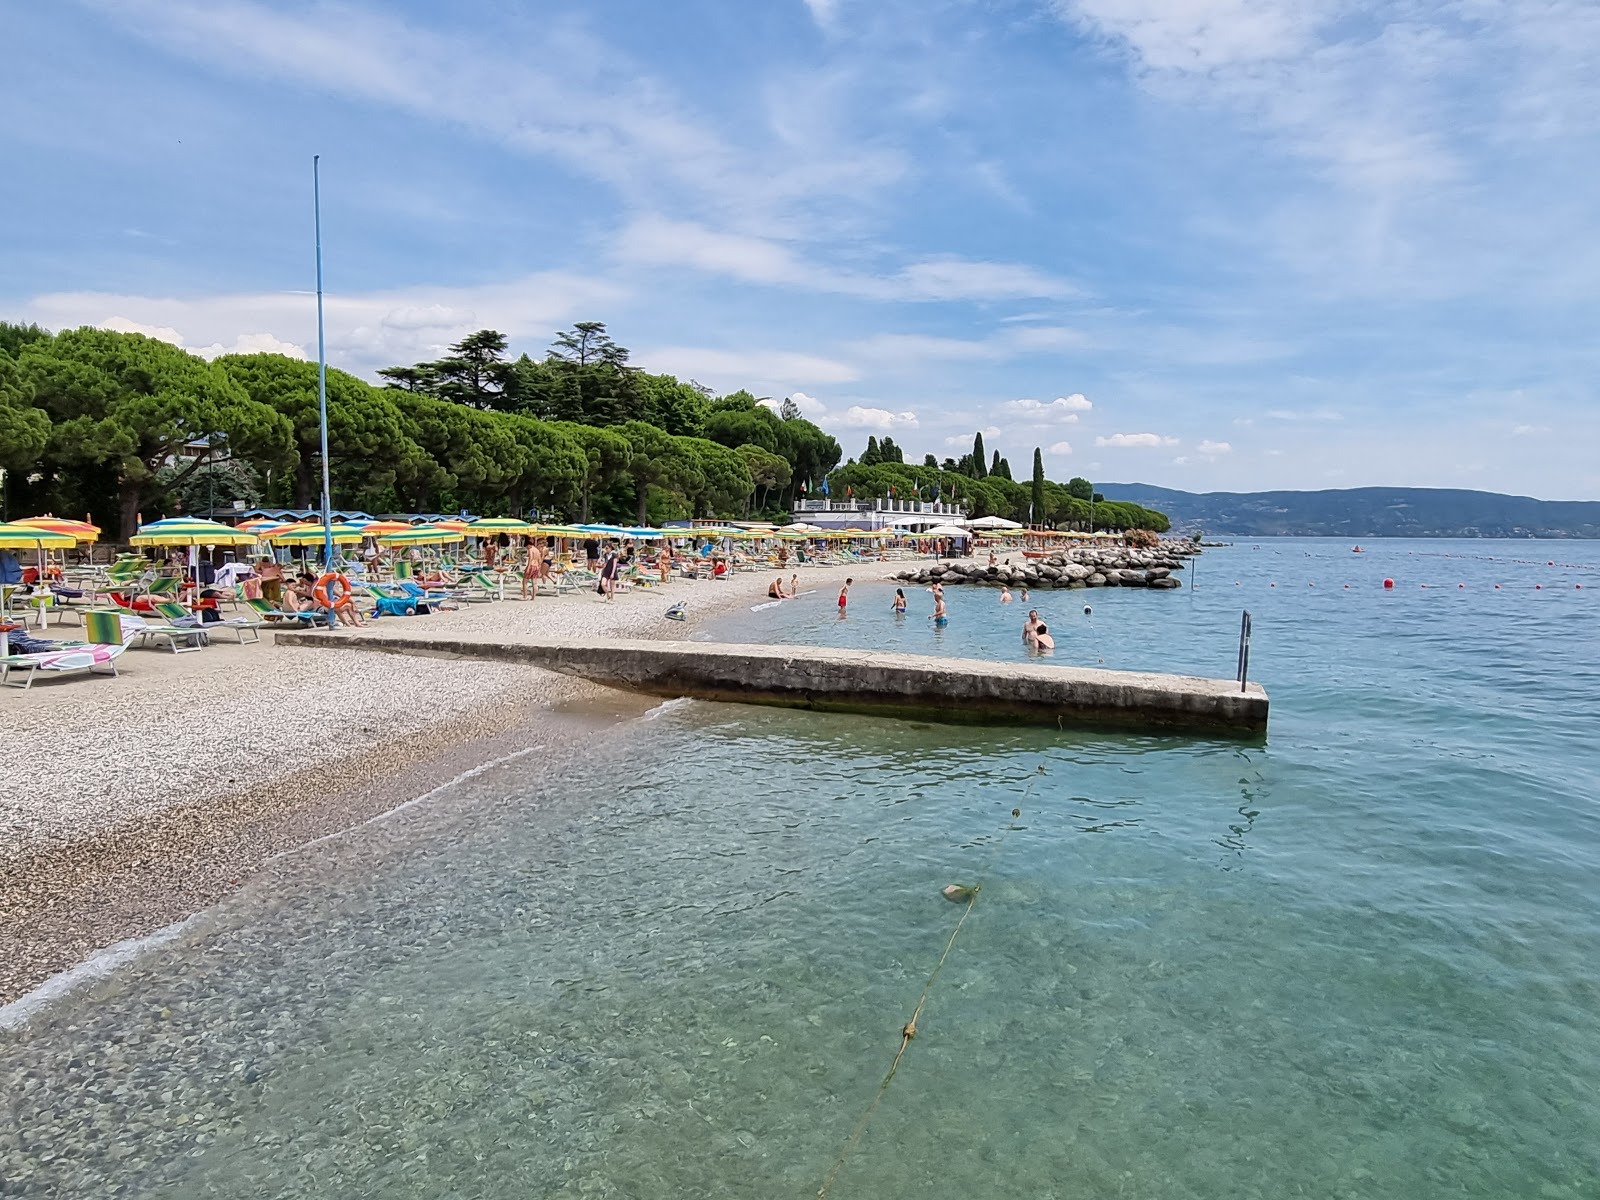 Photo of Spiaggia Lido Azzurro with gray fine pebble surface